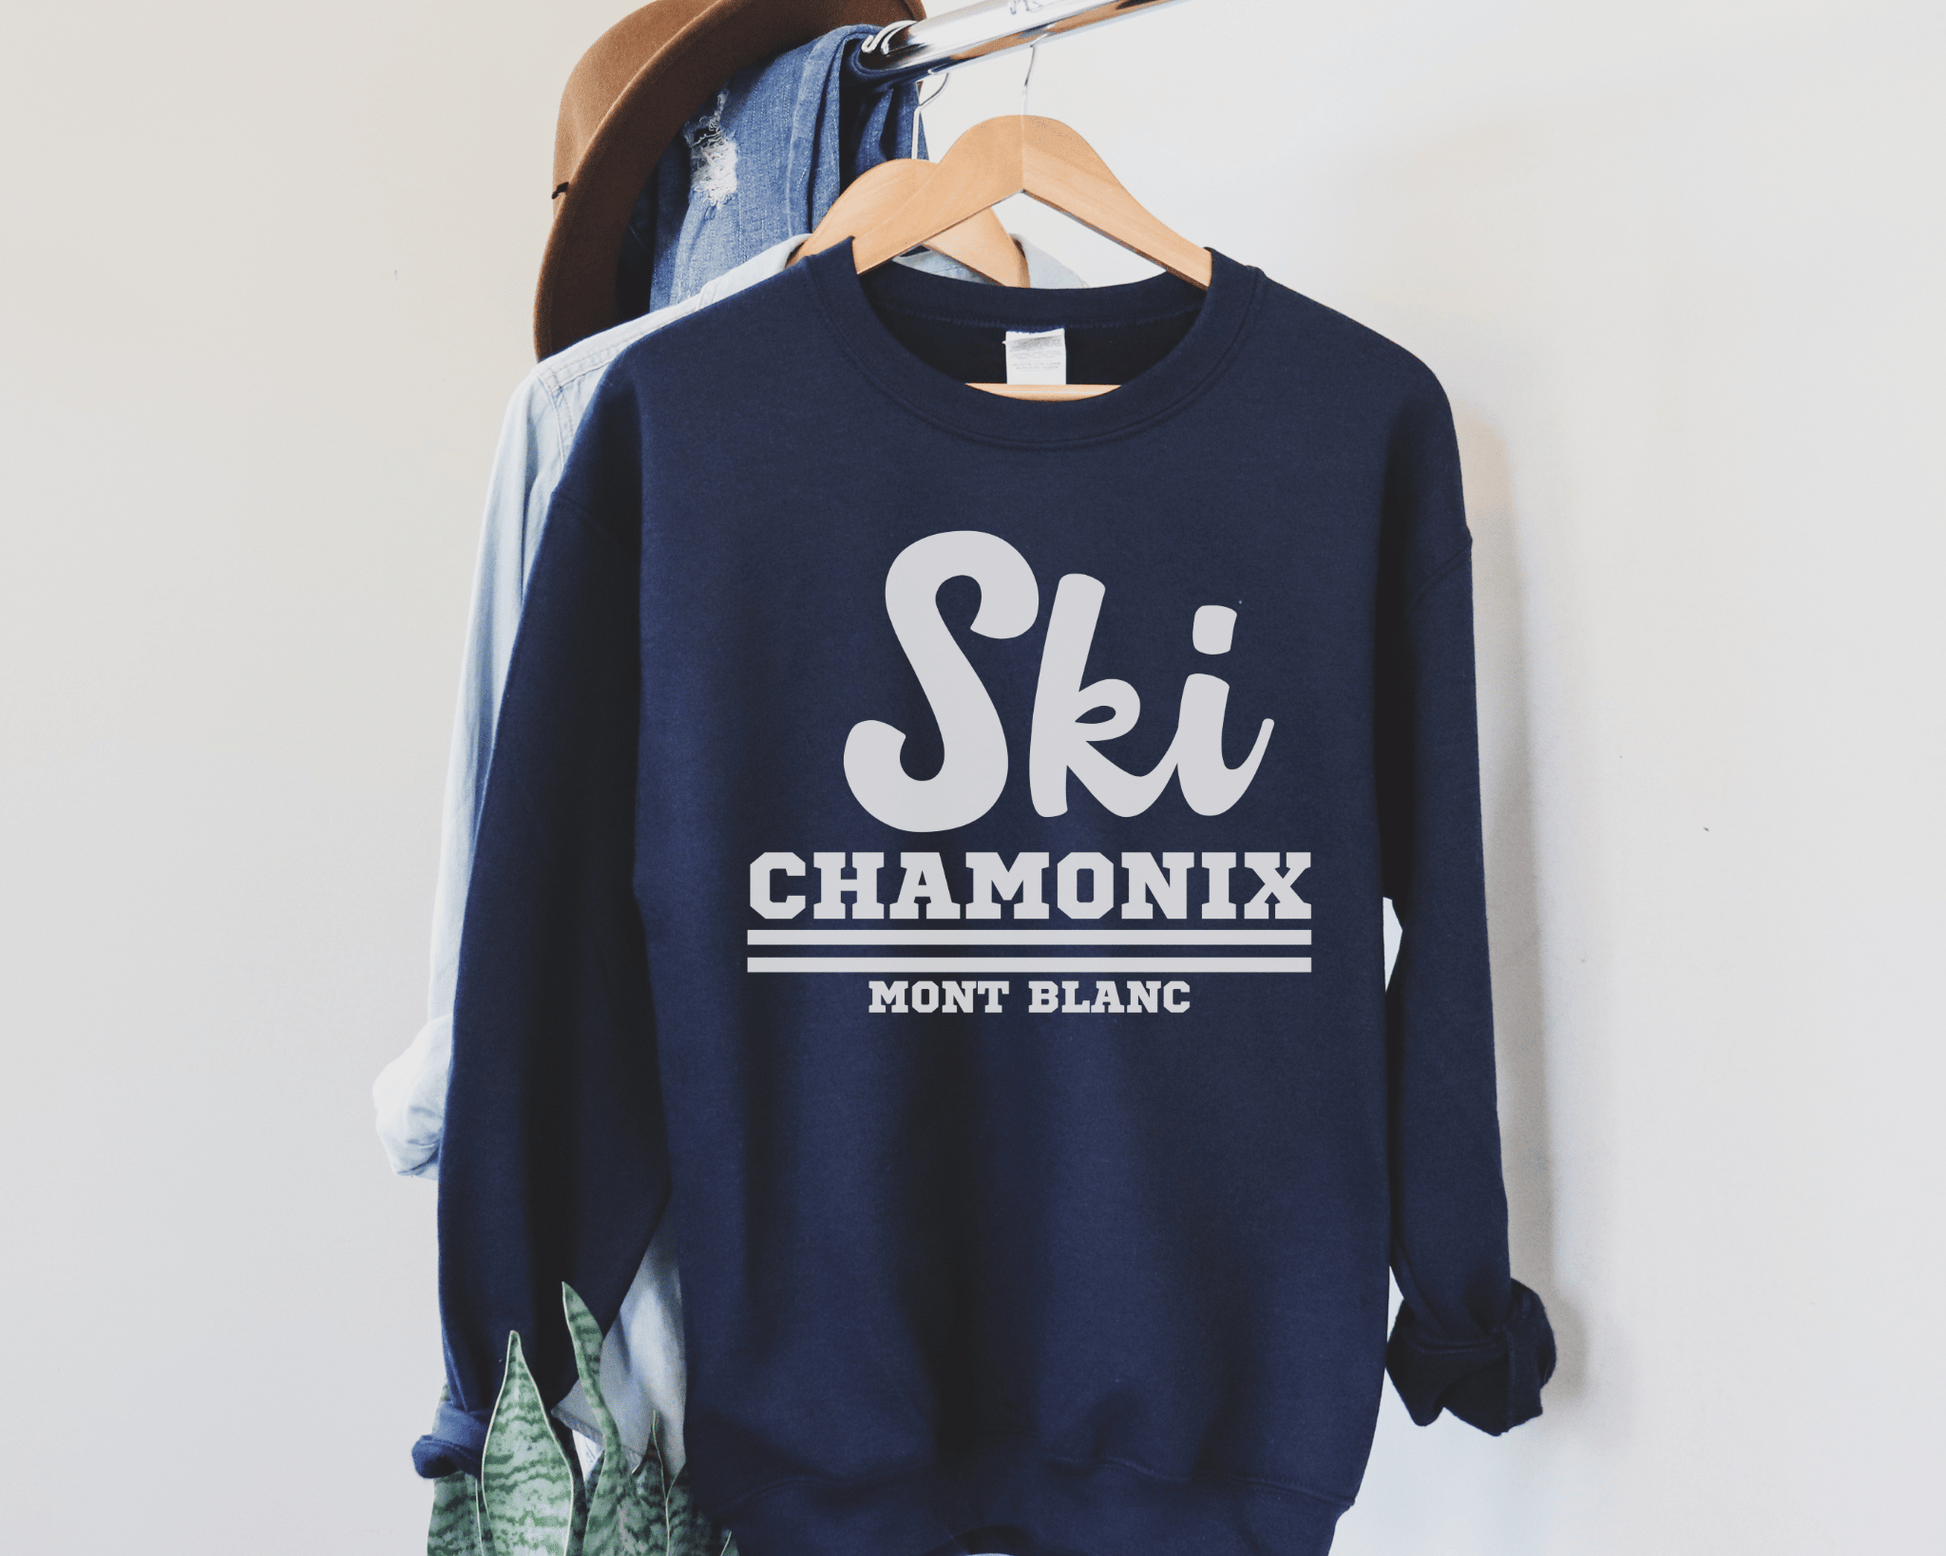 Ski Chamonix Sweatshirt in Navy on a hanger.